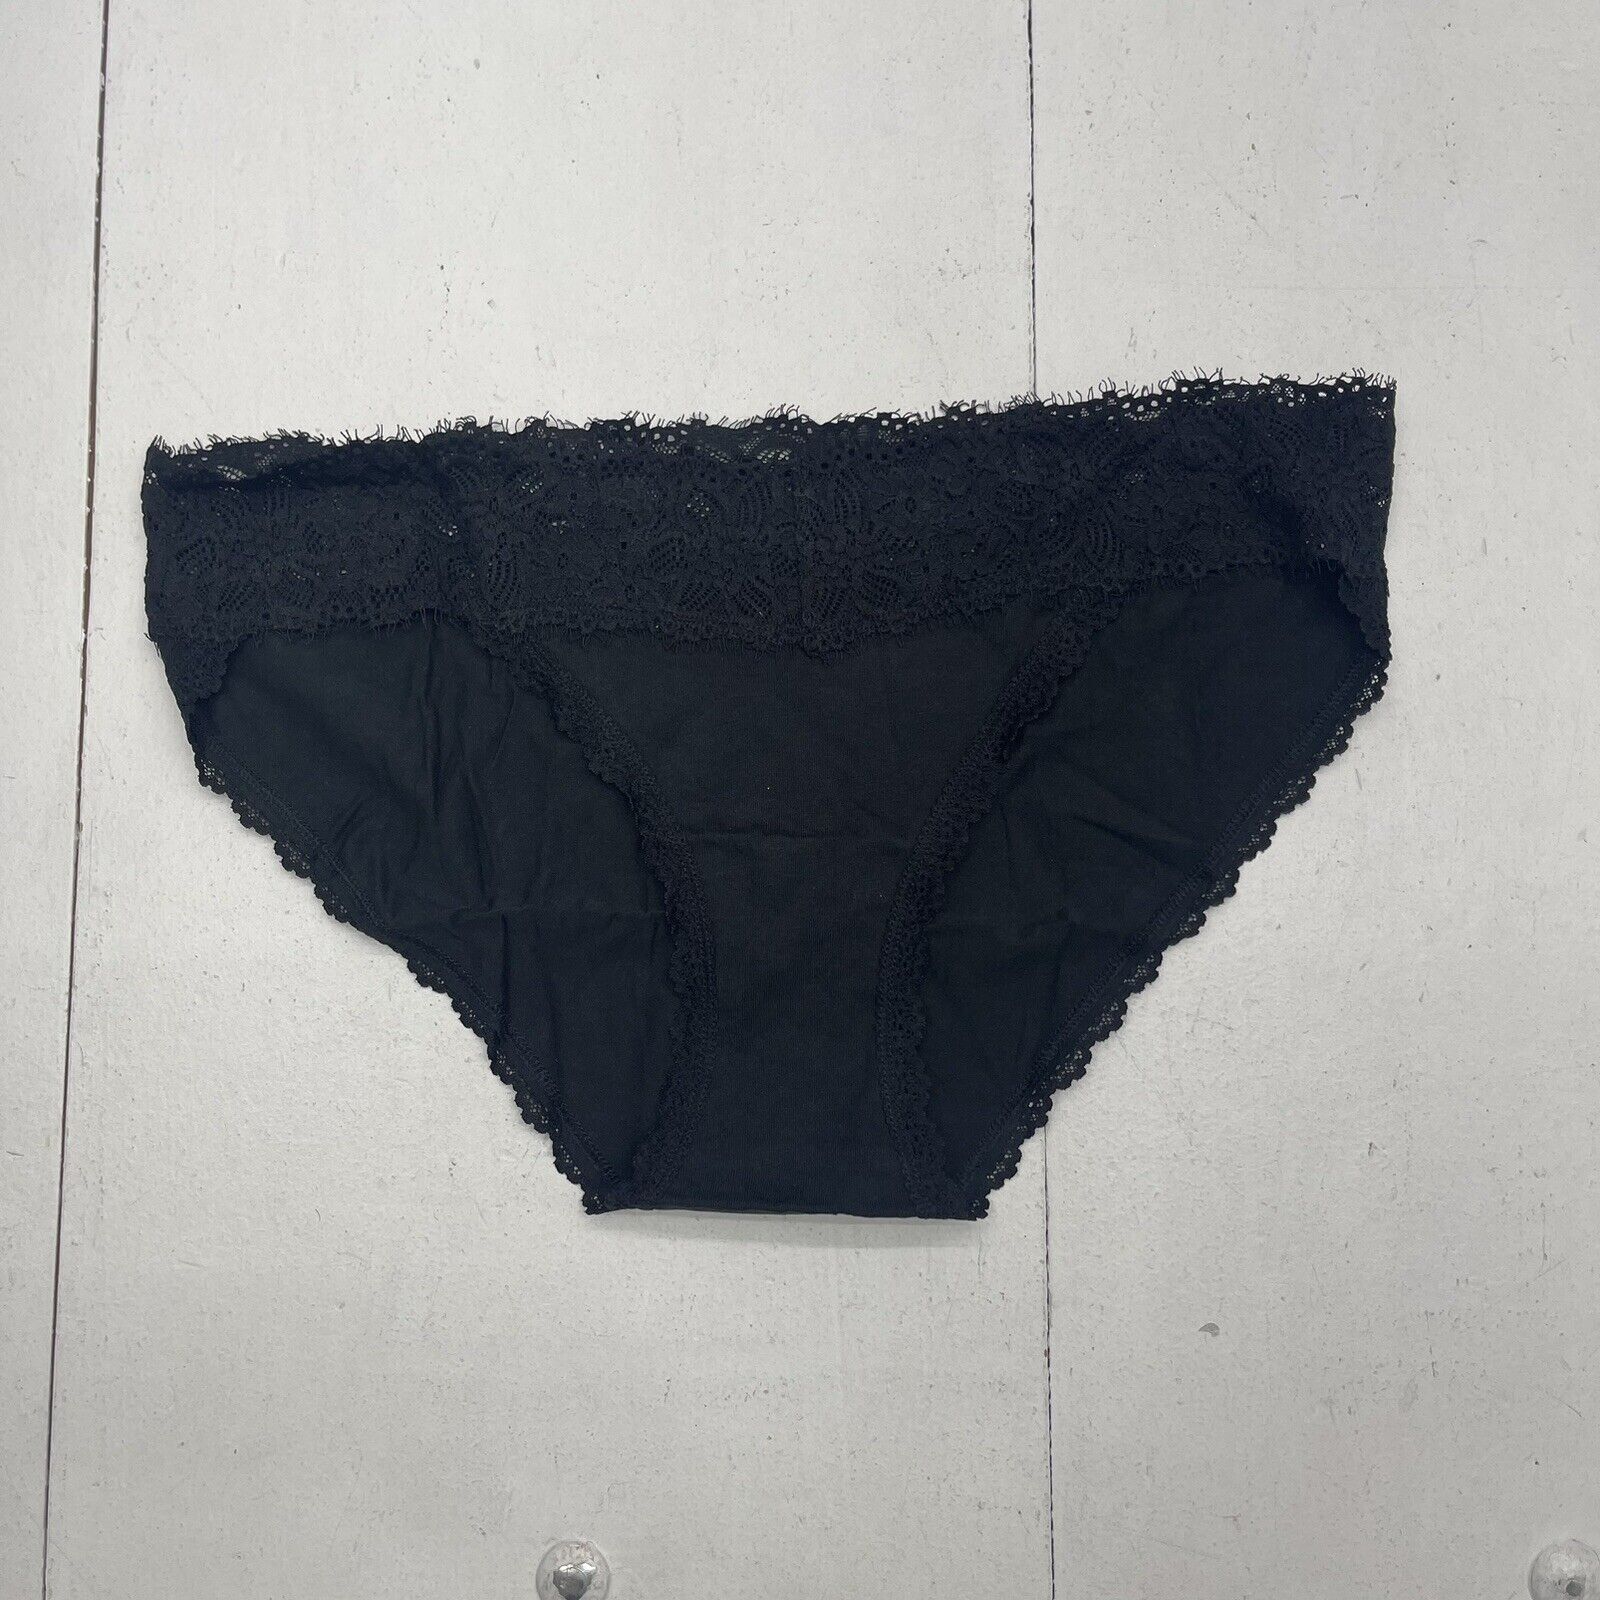 Aerie Black Lace Trim Cheeky Underwear Women's Size Large New - beyond  exchange